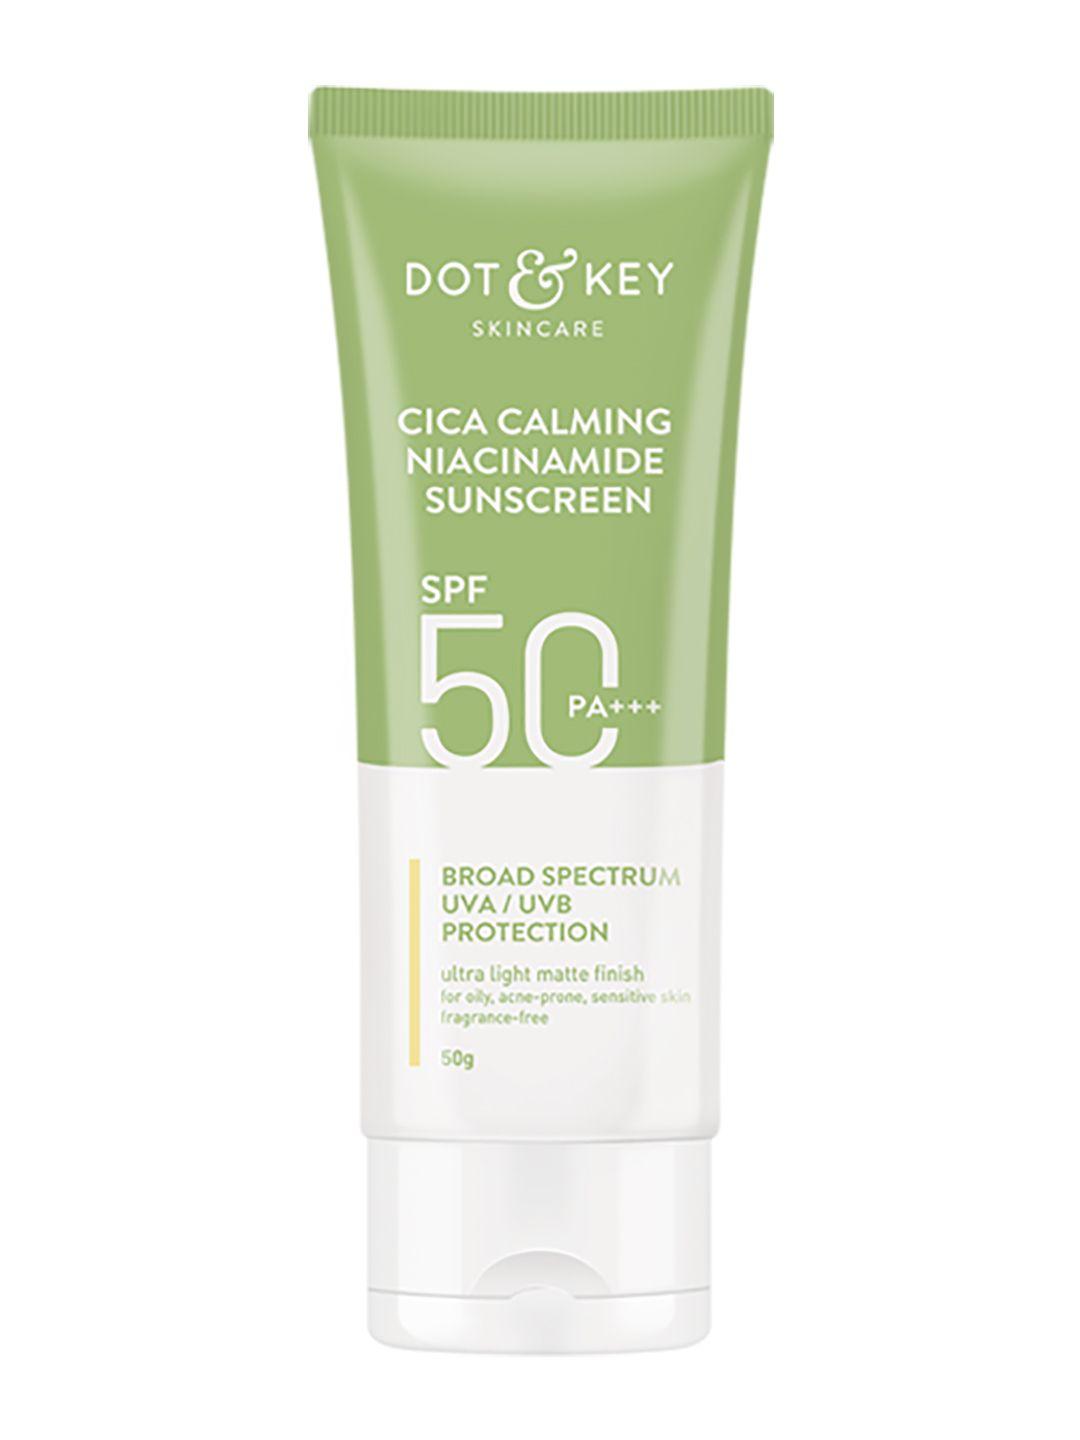 dot-&-key-cica-calming-niacinamide-spf50-pa+++-sunscreen---50g